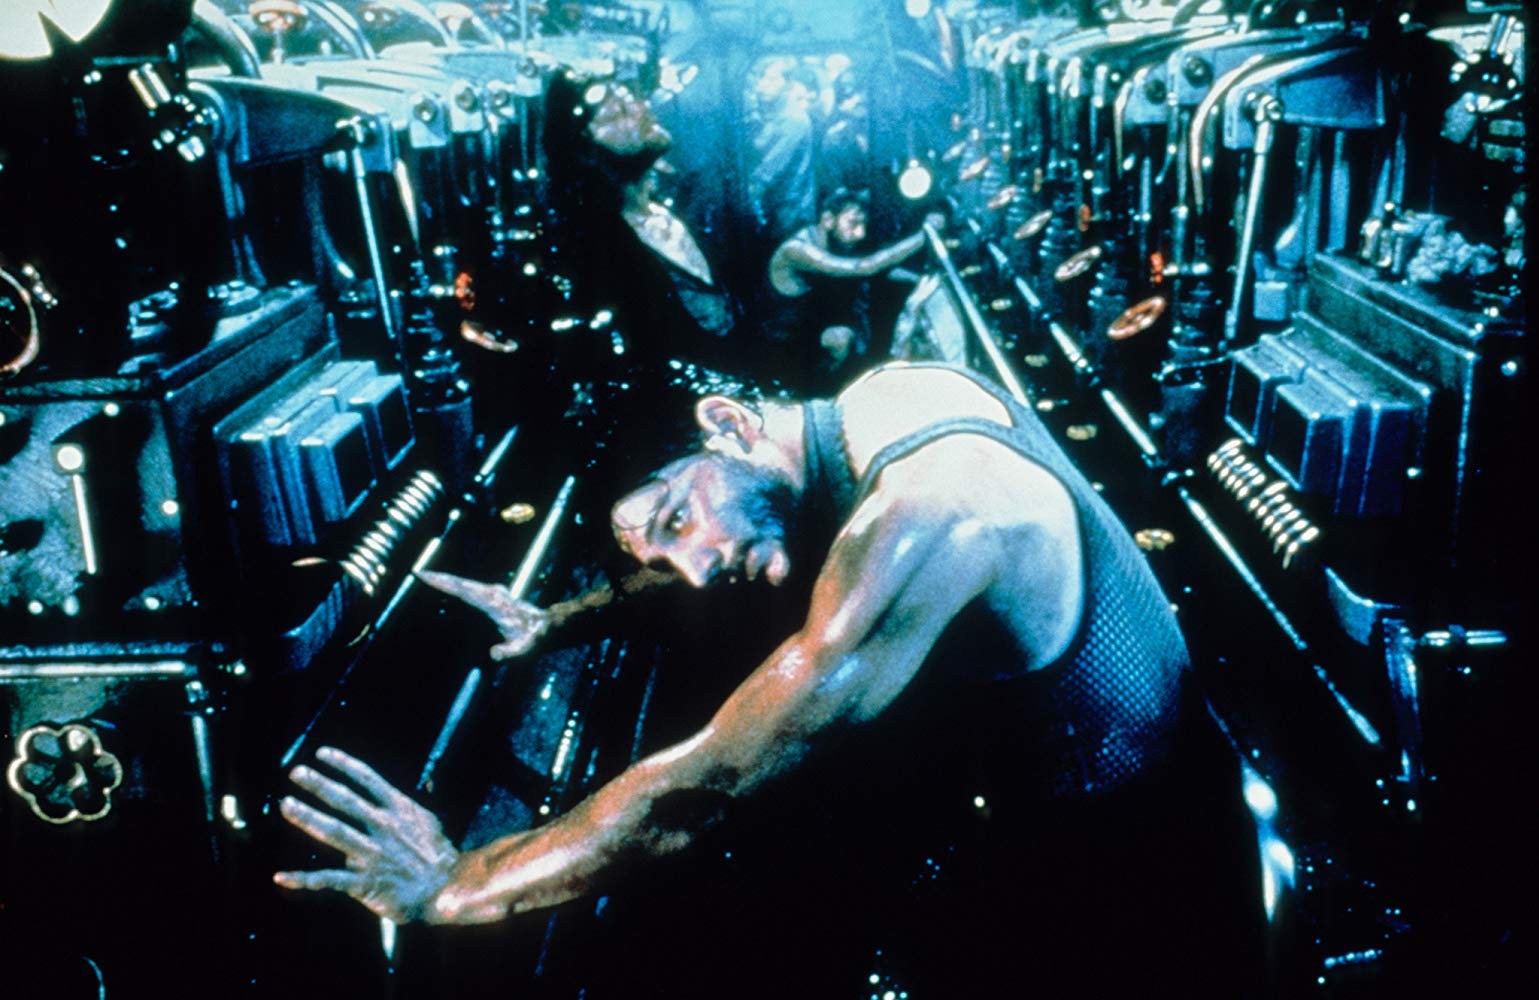 Кадр N168008 из фильма Подводная лодка / Das Boot (1981) на портале KinoNew...